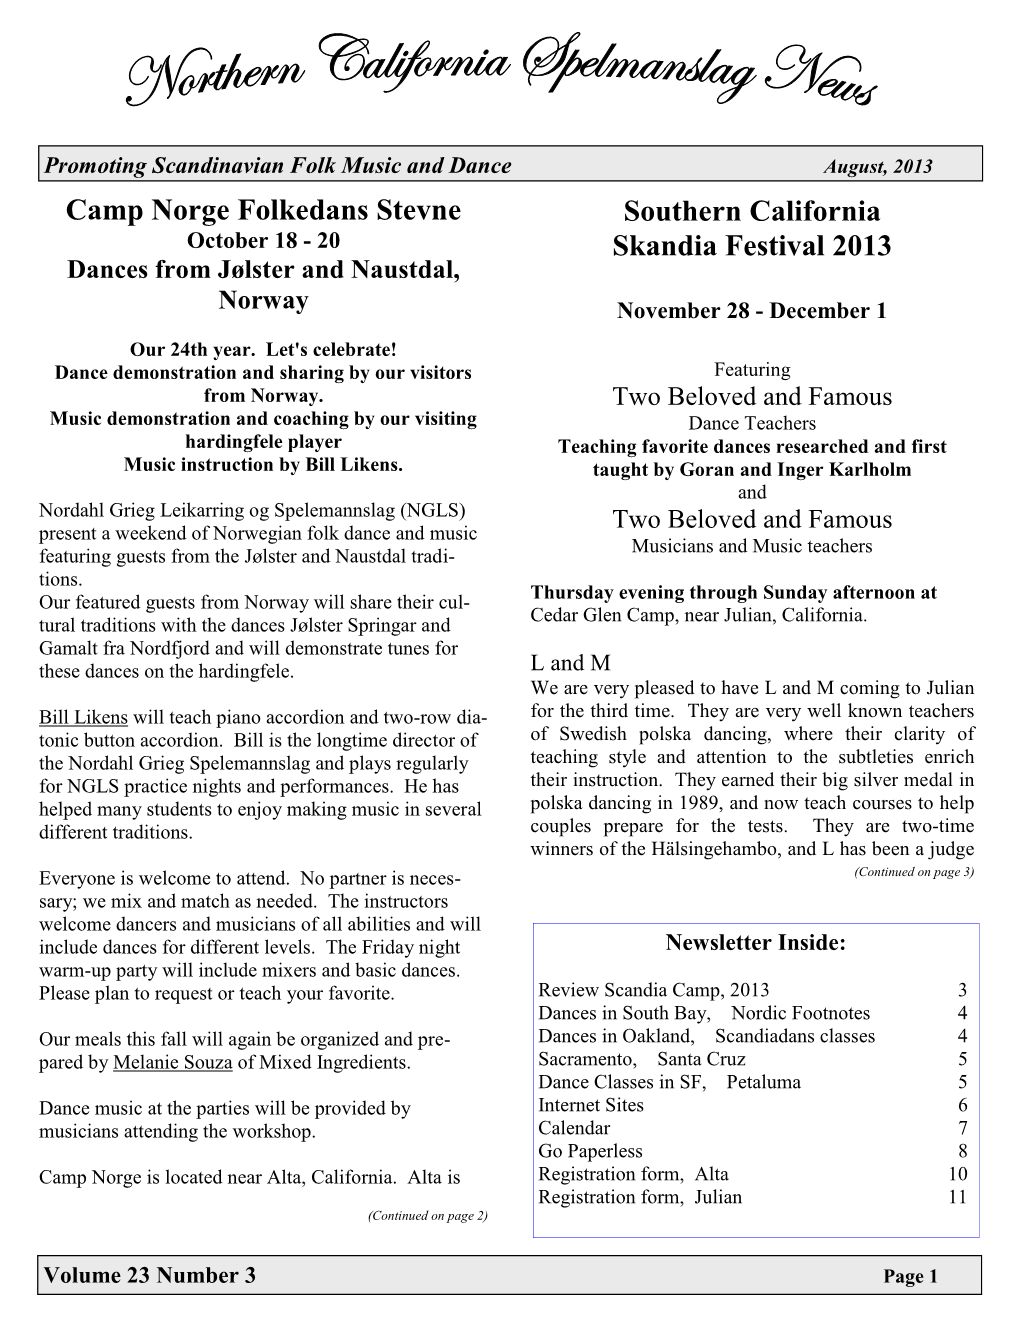 Camp Norge Folkedans Stevne Southern California Skandia